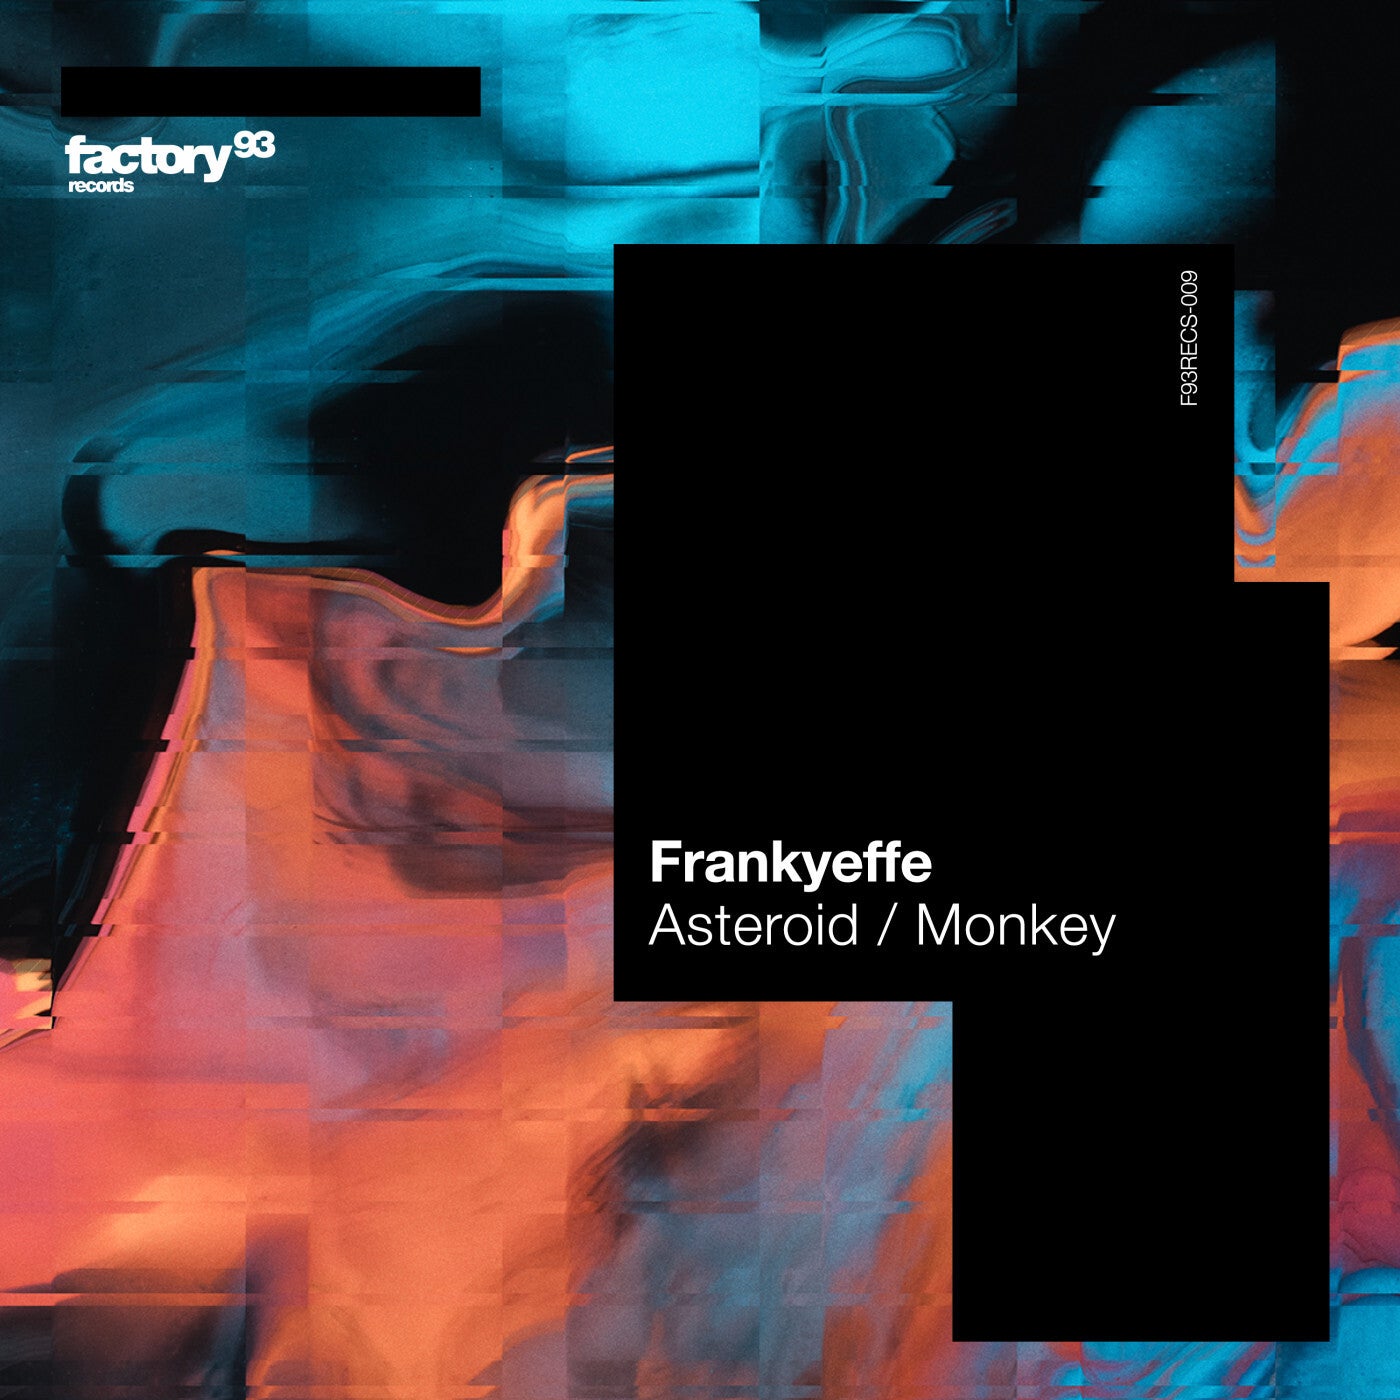 image cover: Frankyeffe - Asteroid / Monkey / F93RECS009B